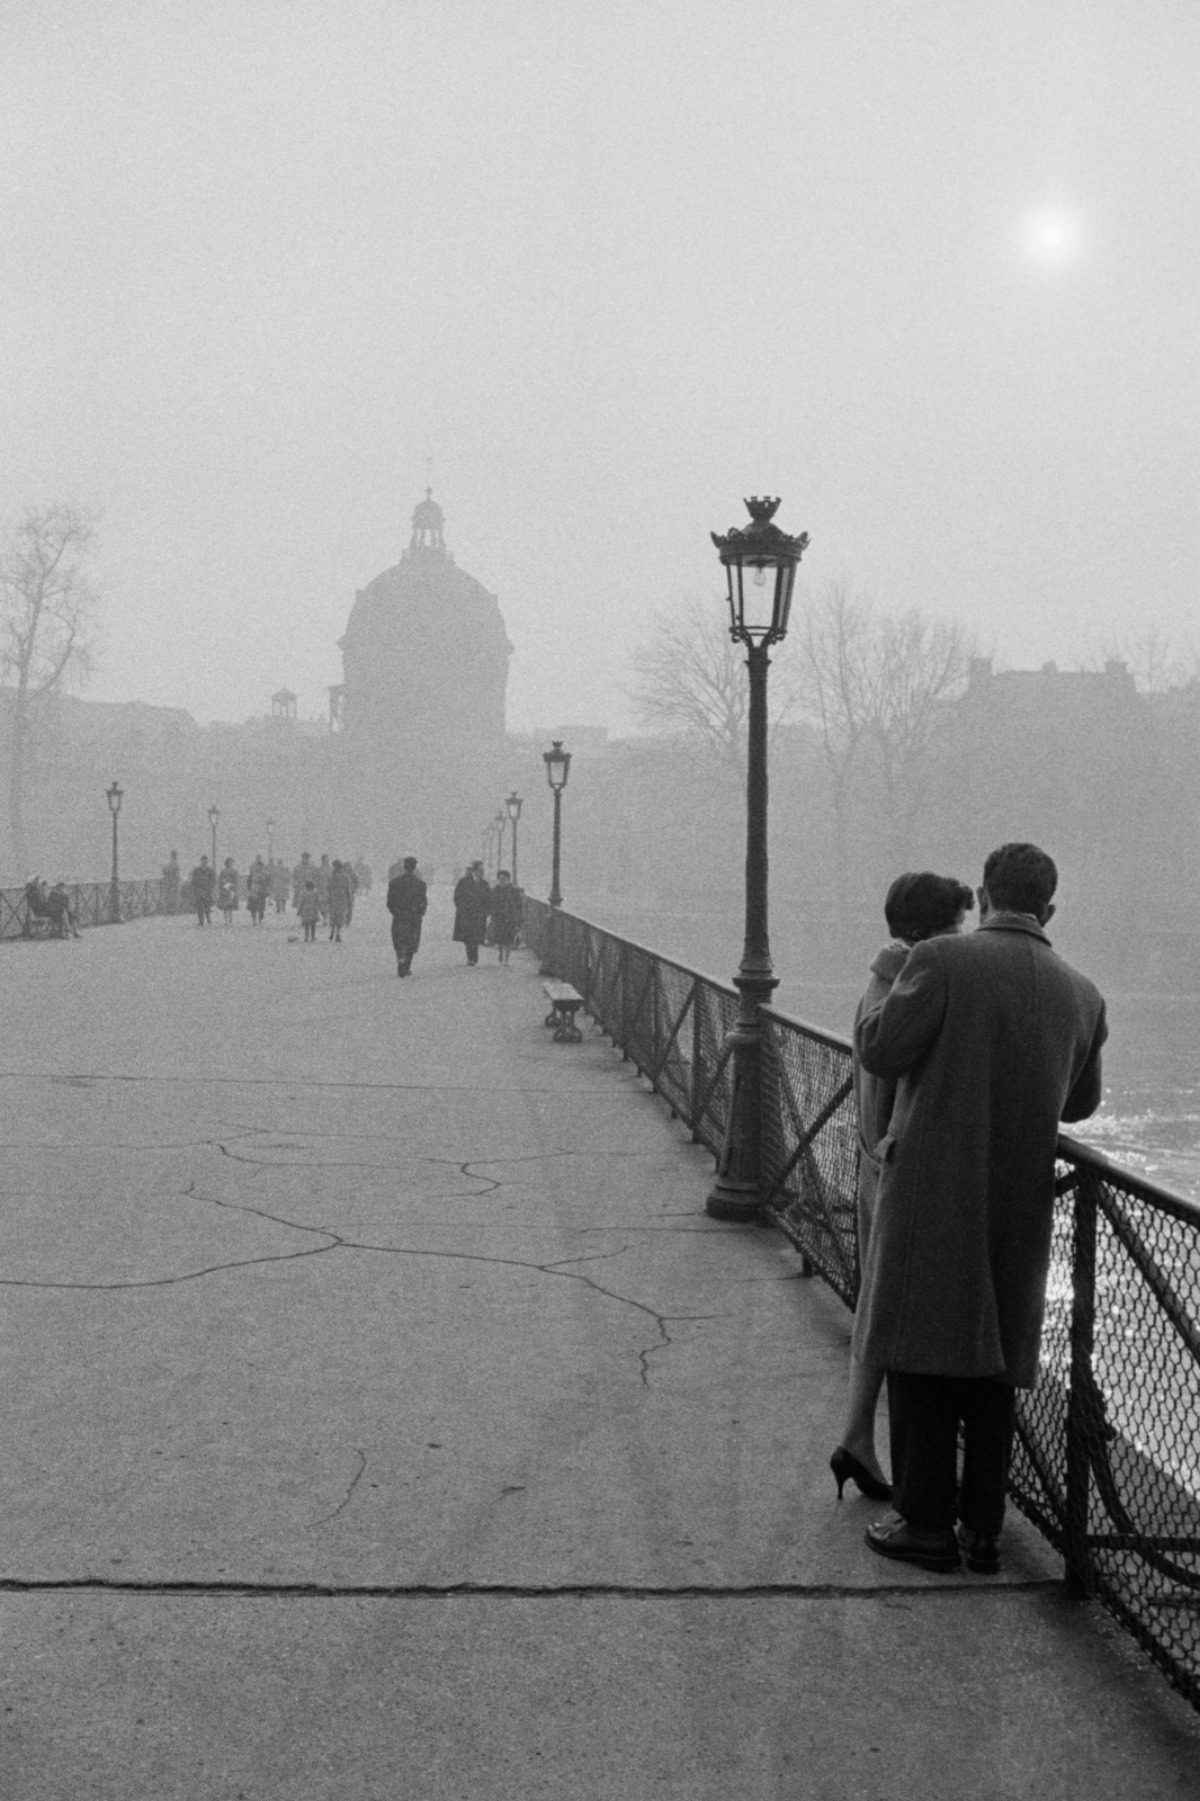 street scenes of Paris in the 1950s